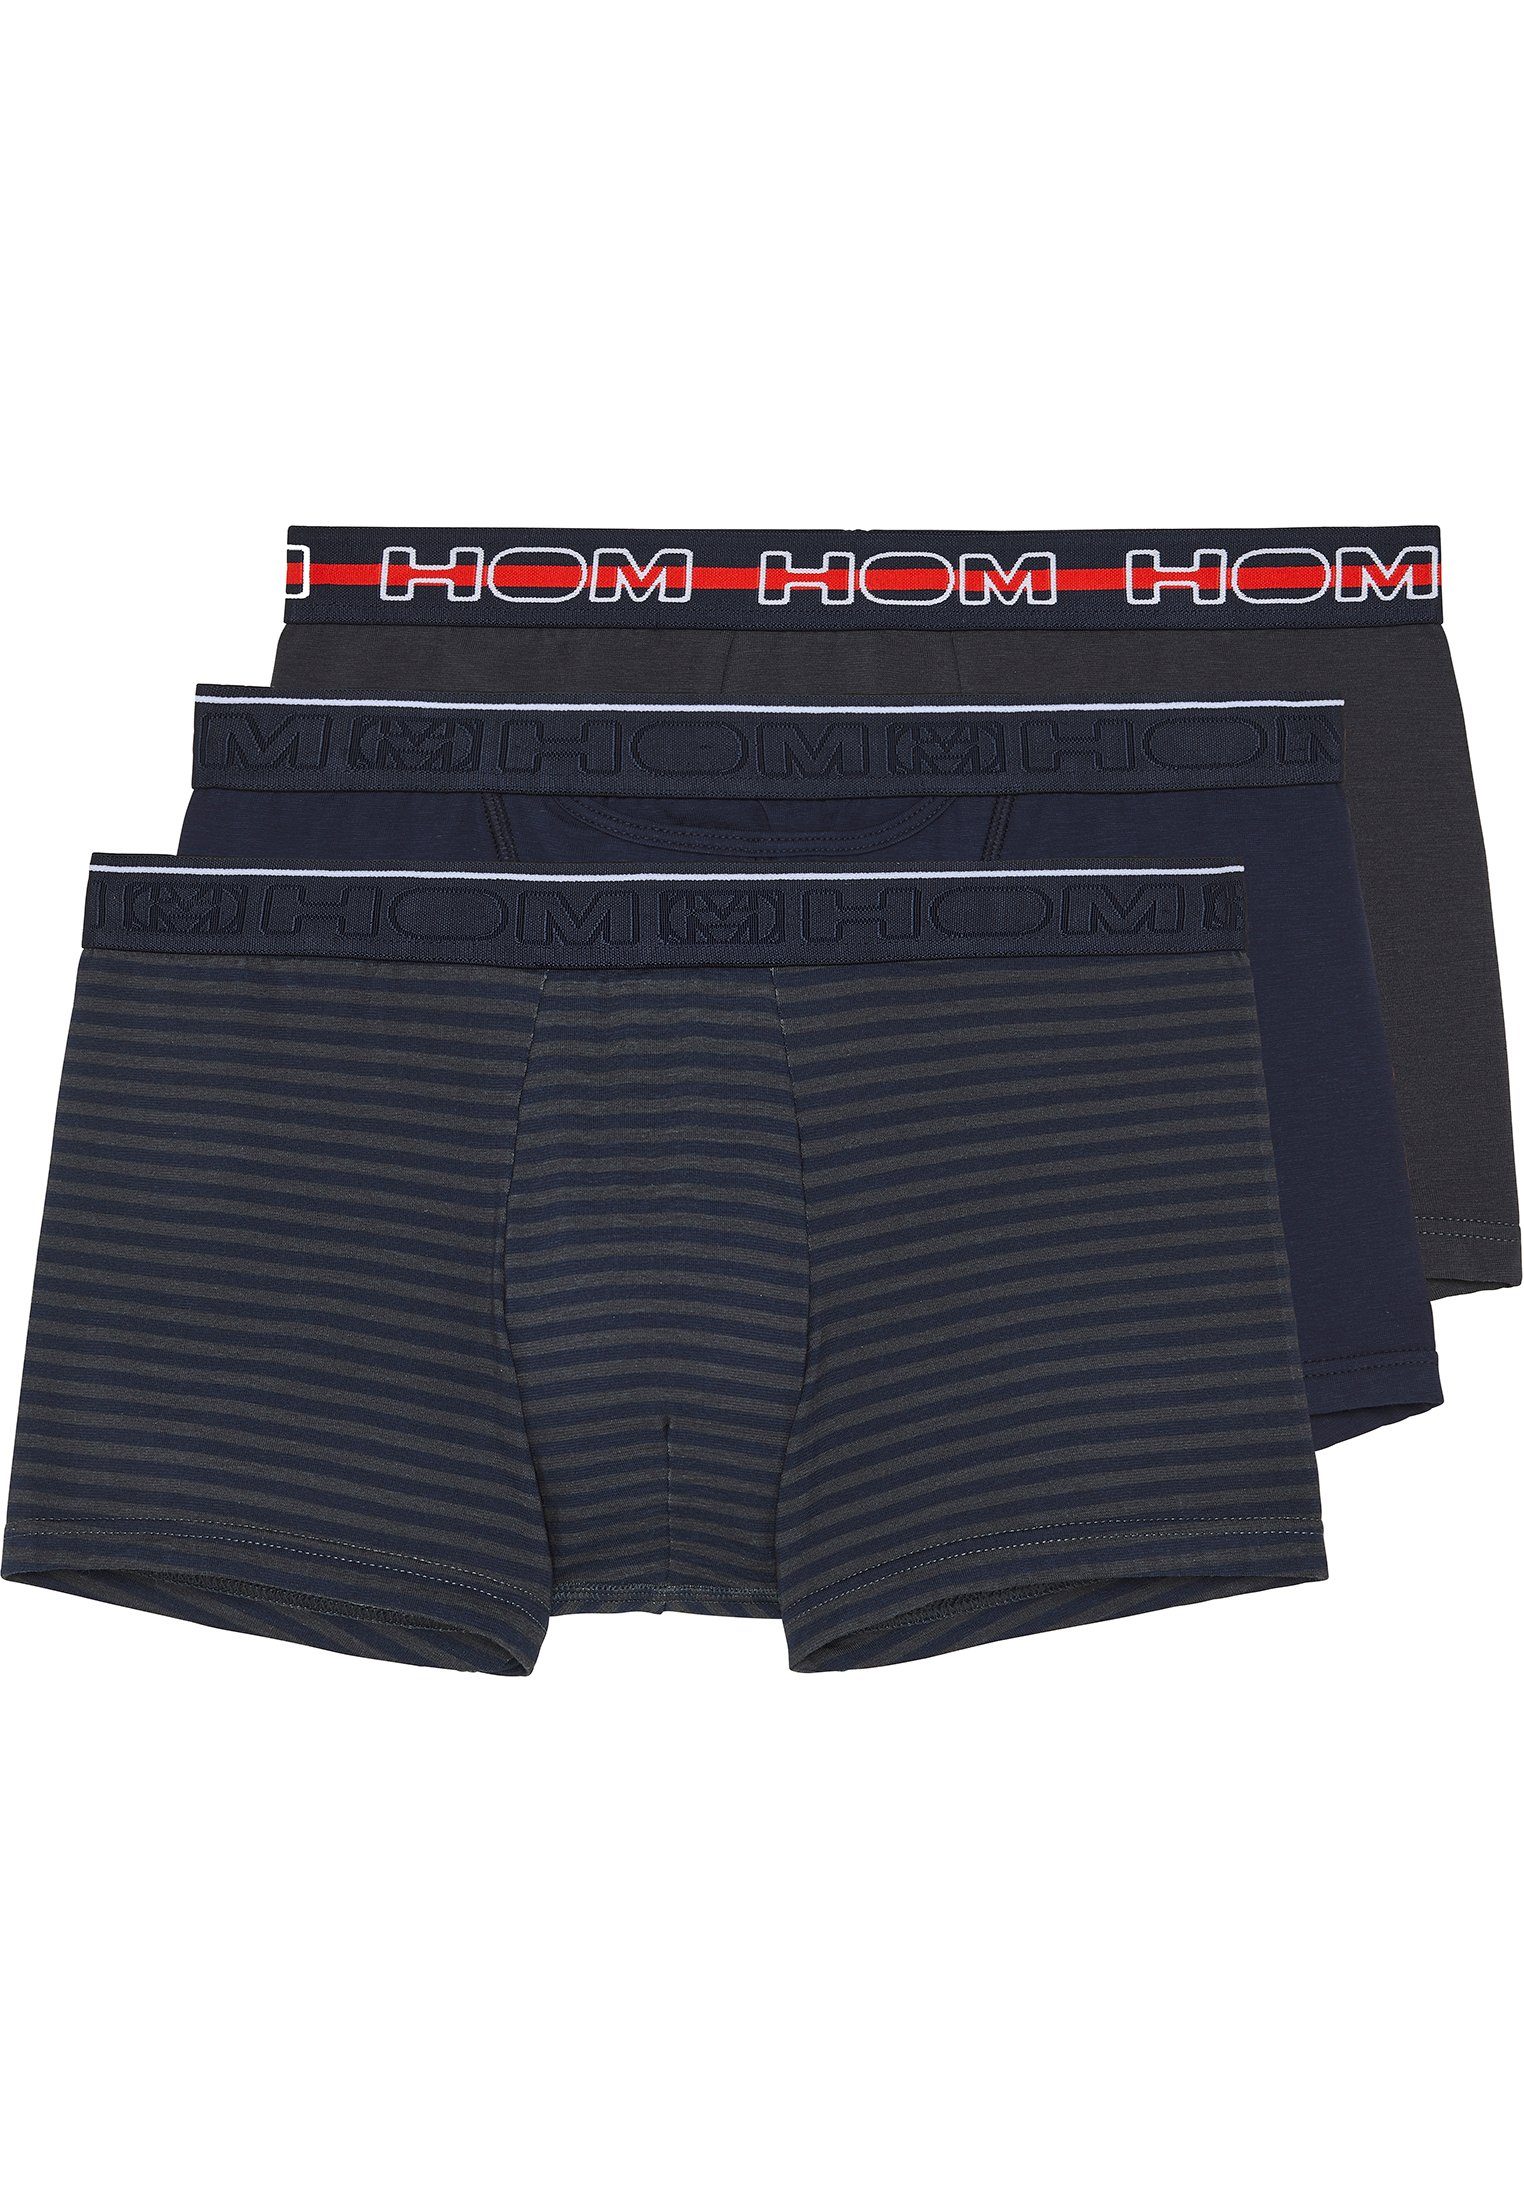 Wäsche/Bademode Unterhosen Hom Retro Pants 3-Pack Boxer Briefs 'Matt #2' (3 Stück)